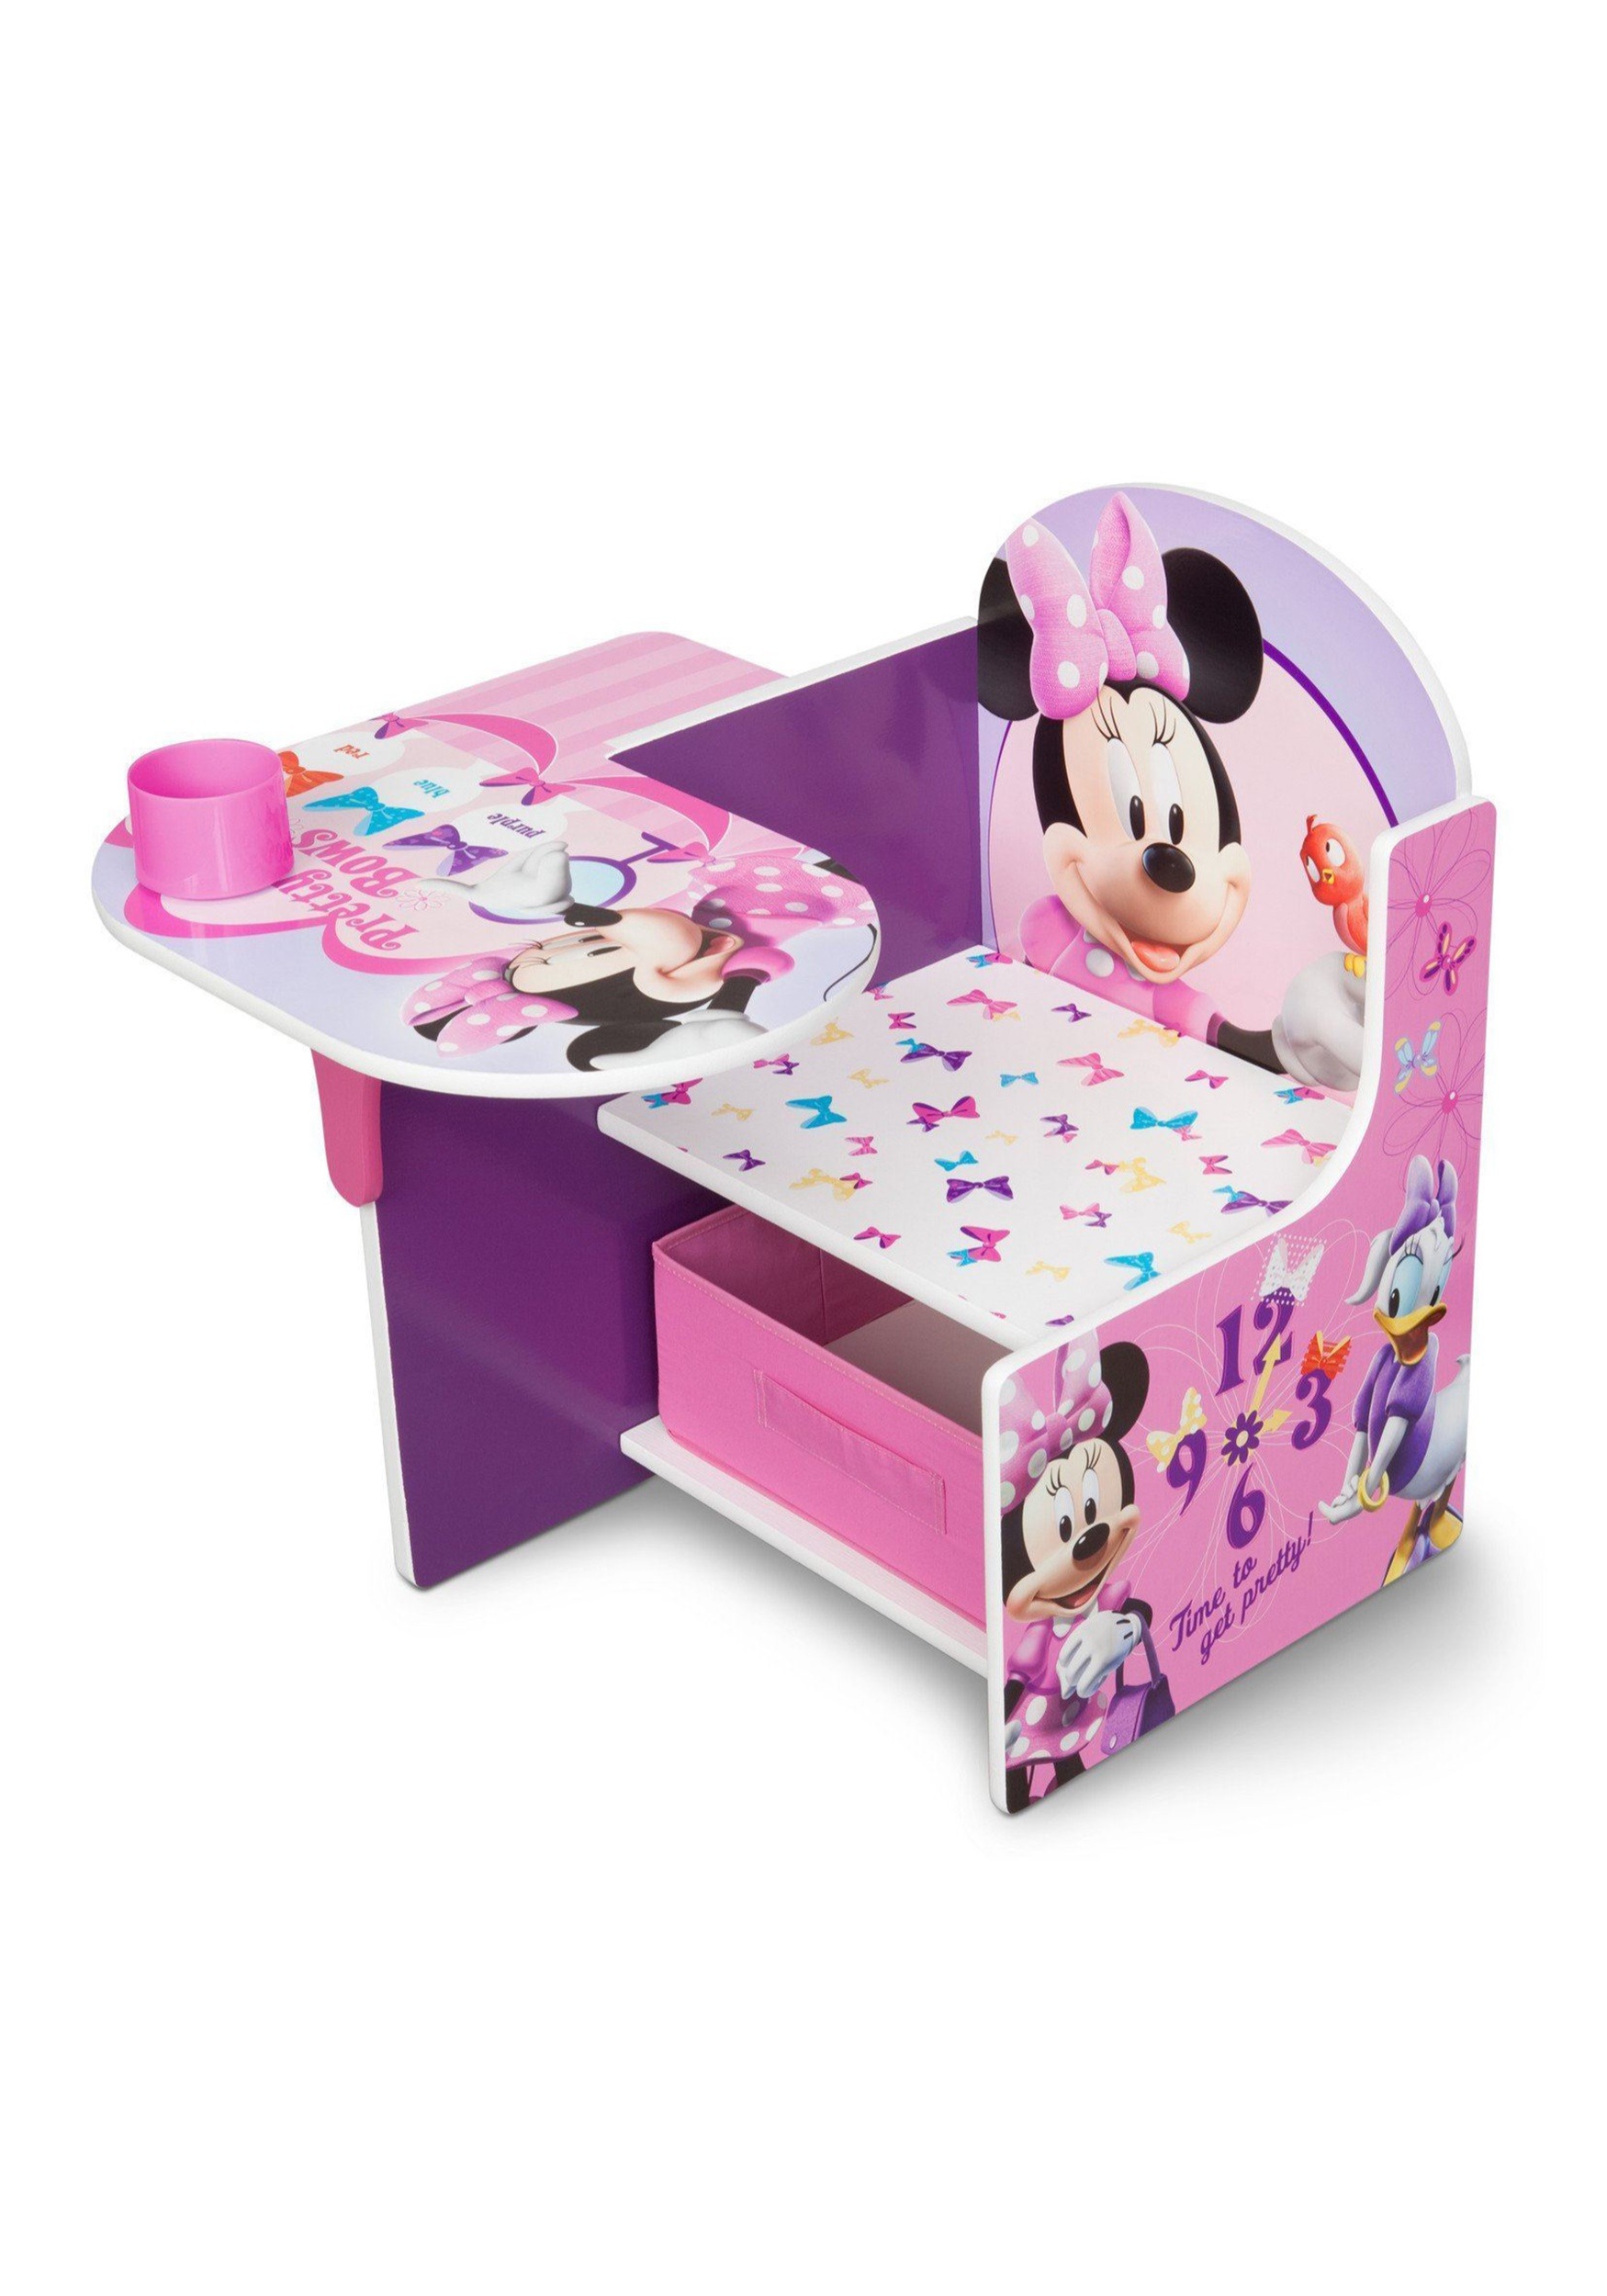 Disney Minnie Mouse Chair Desk with Storage Bin